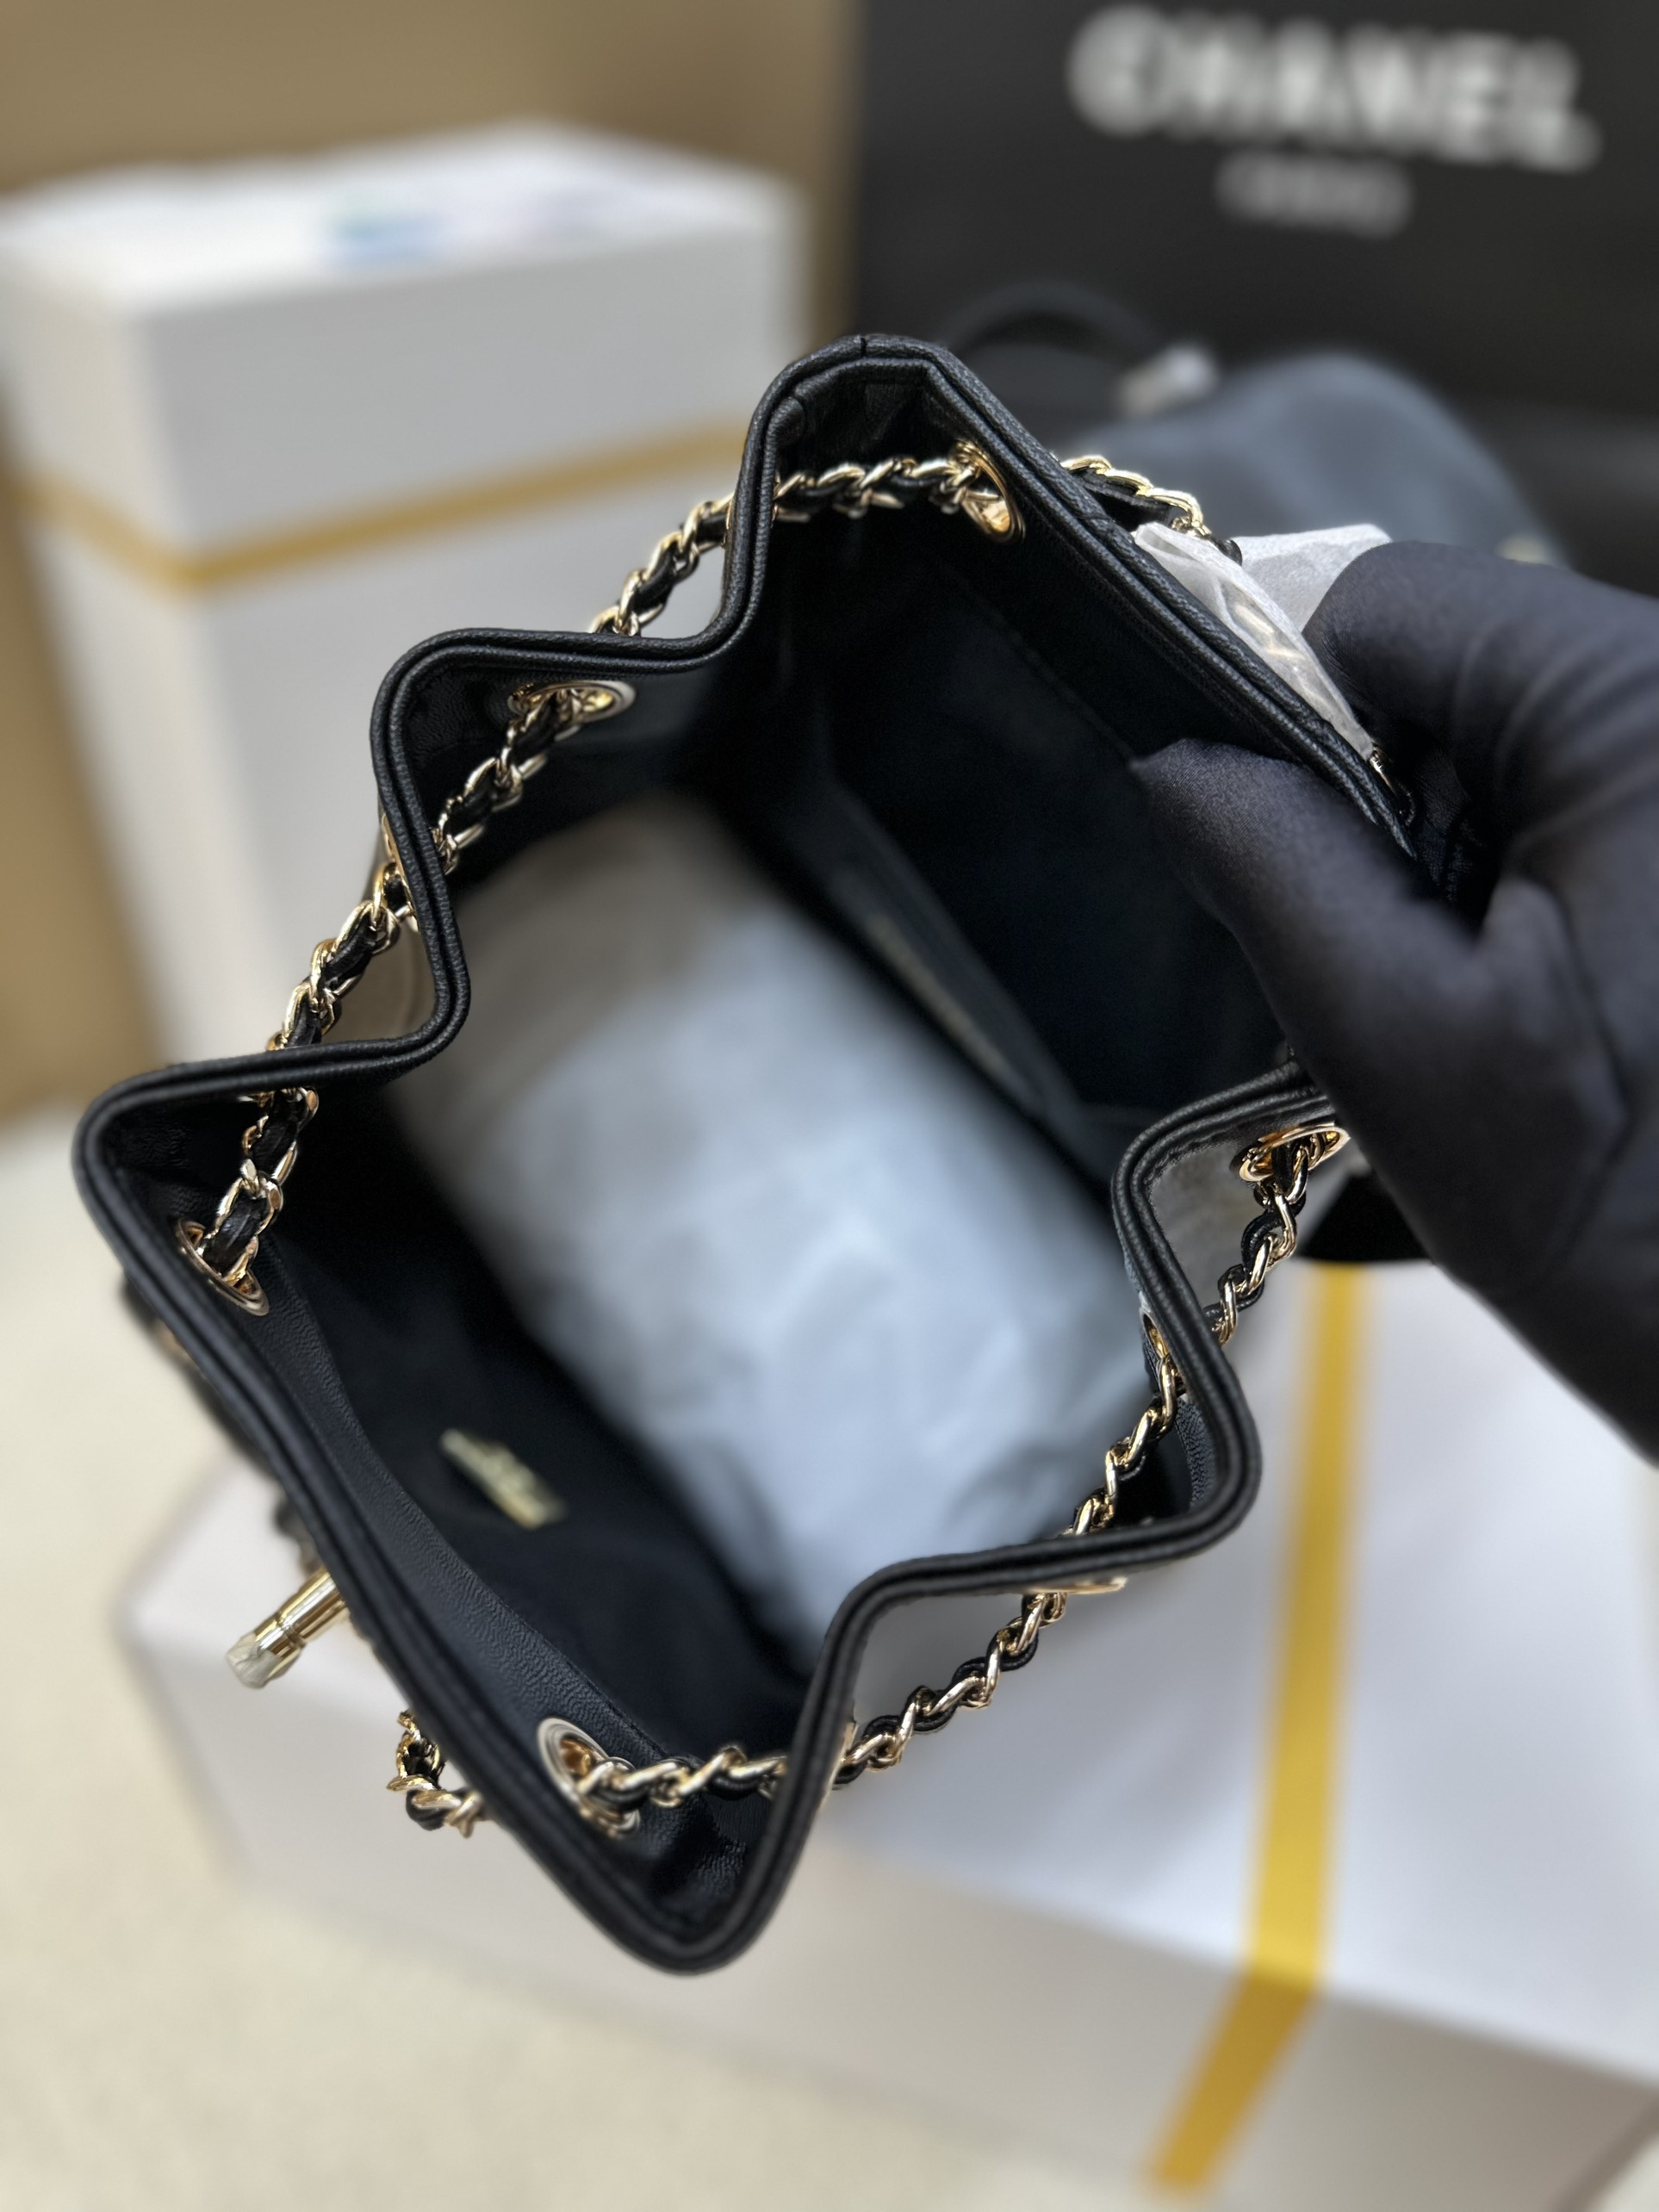 Balo Chanel Mini Duma Backpack Super Màu Đen Size 19cm